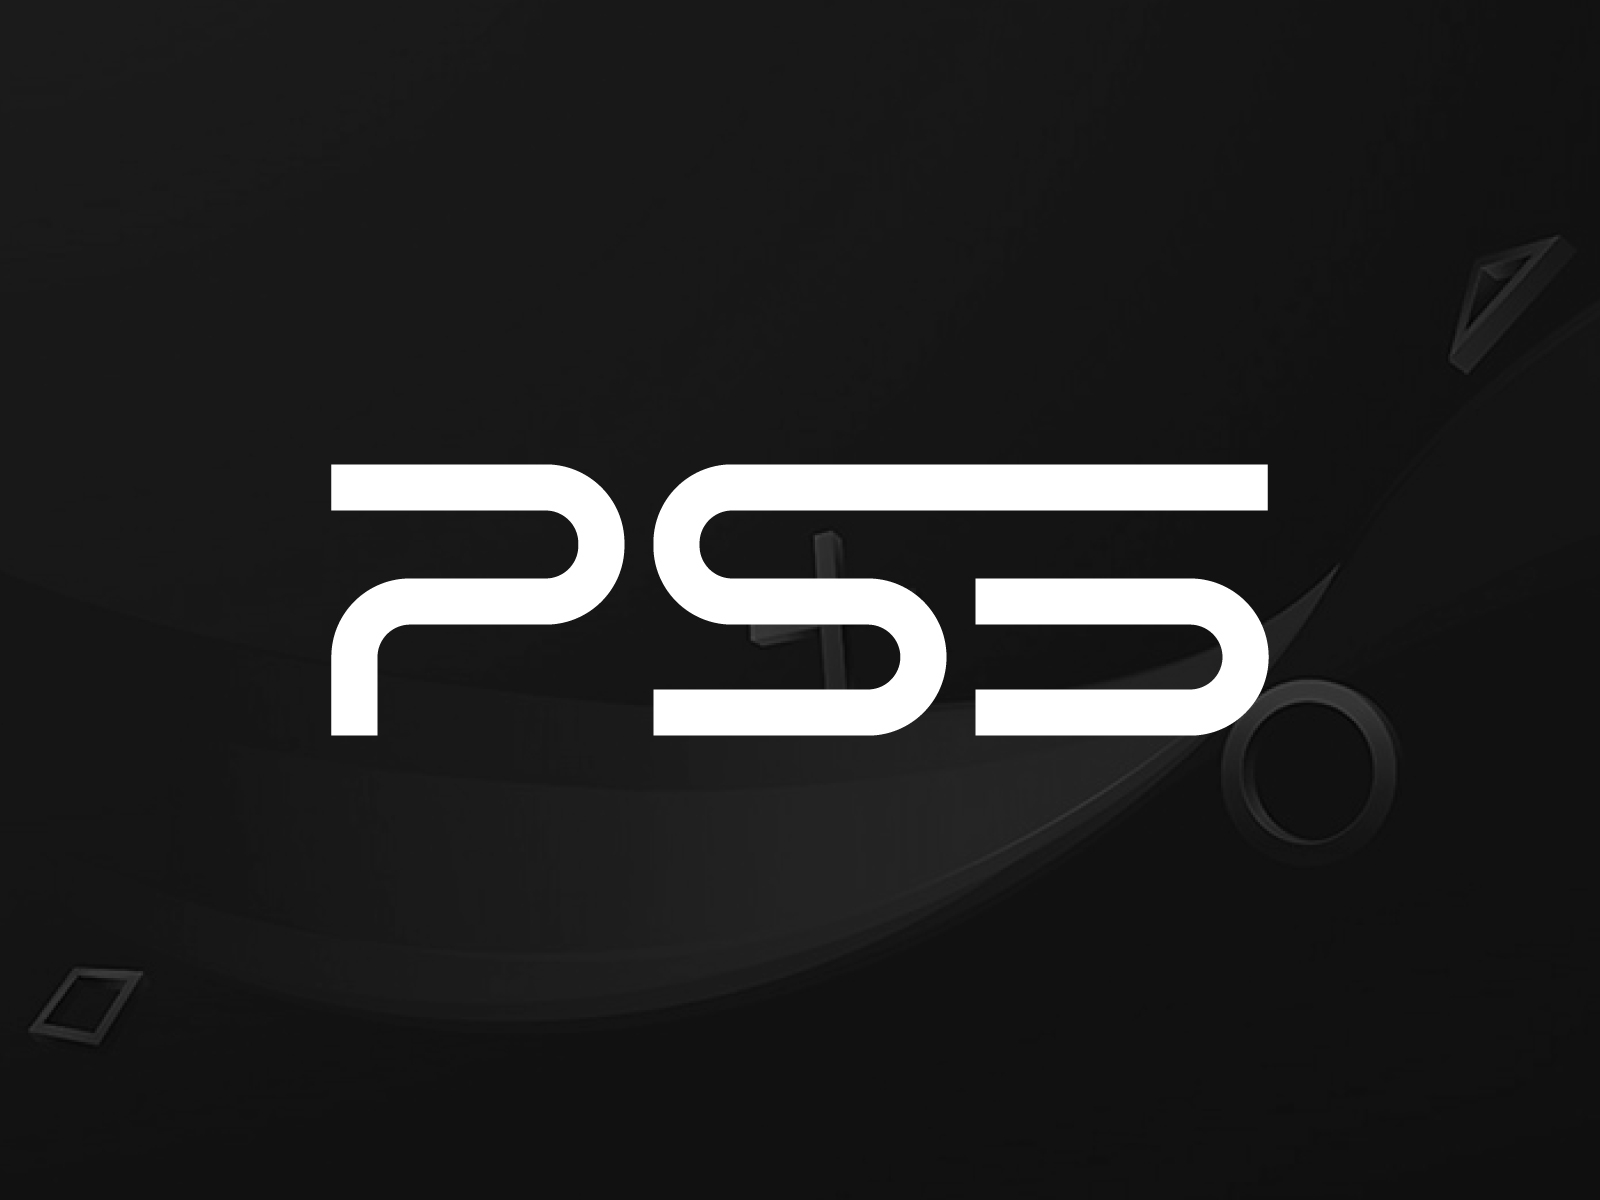 Ps5 update. Sony ps5 logo. PLAYSTATION 5. Sony PLAYSTATION 5 logo svg. Плейстейшен 5 лого вектор.